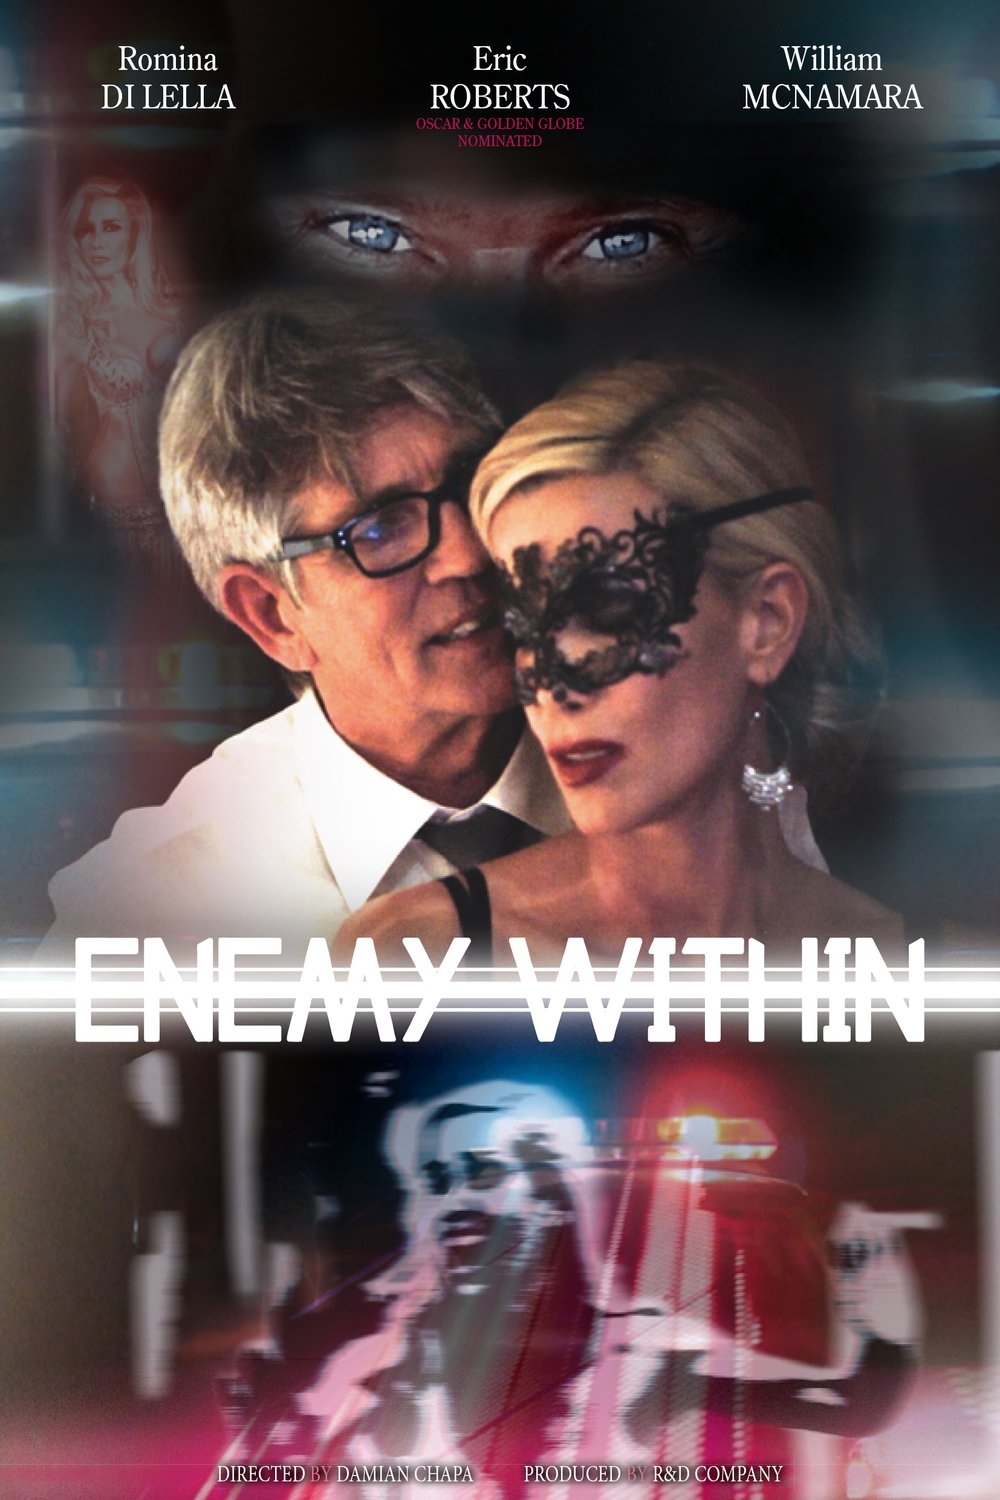 L'affiche du film Enemy Within